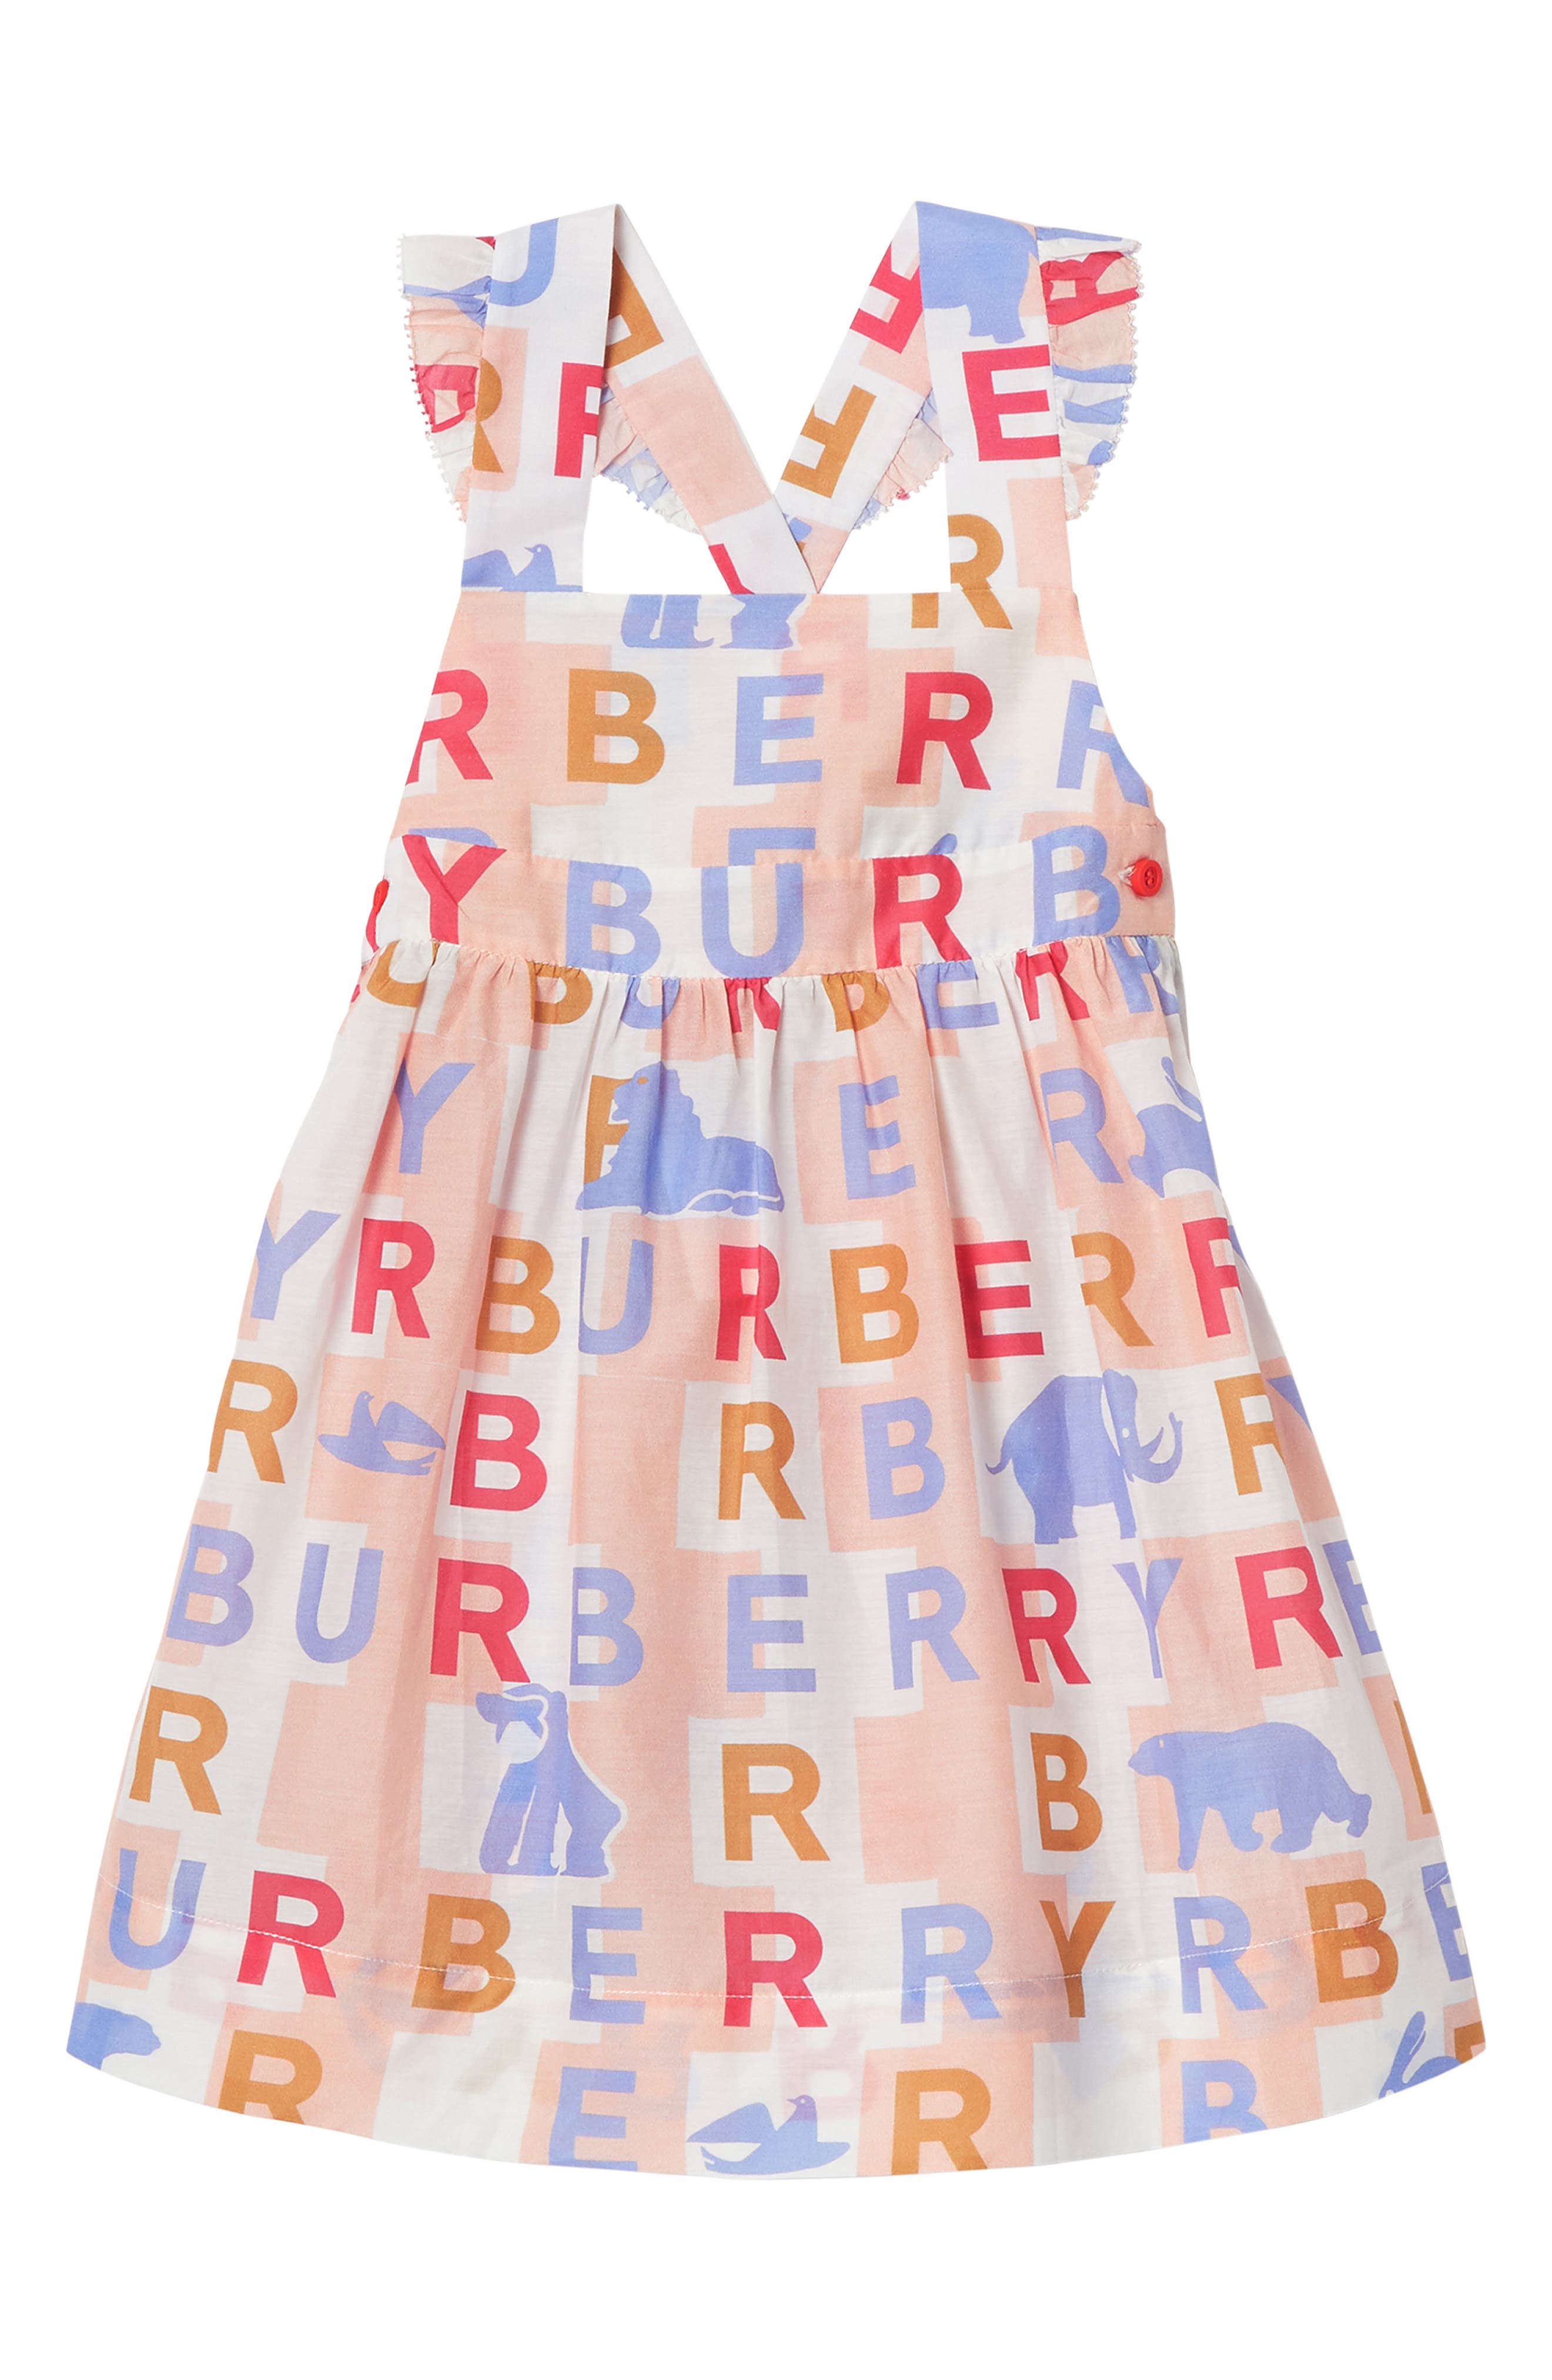 burberry dress 2t